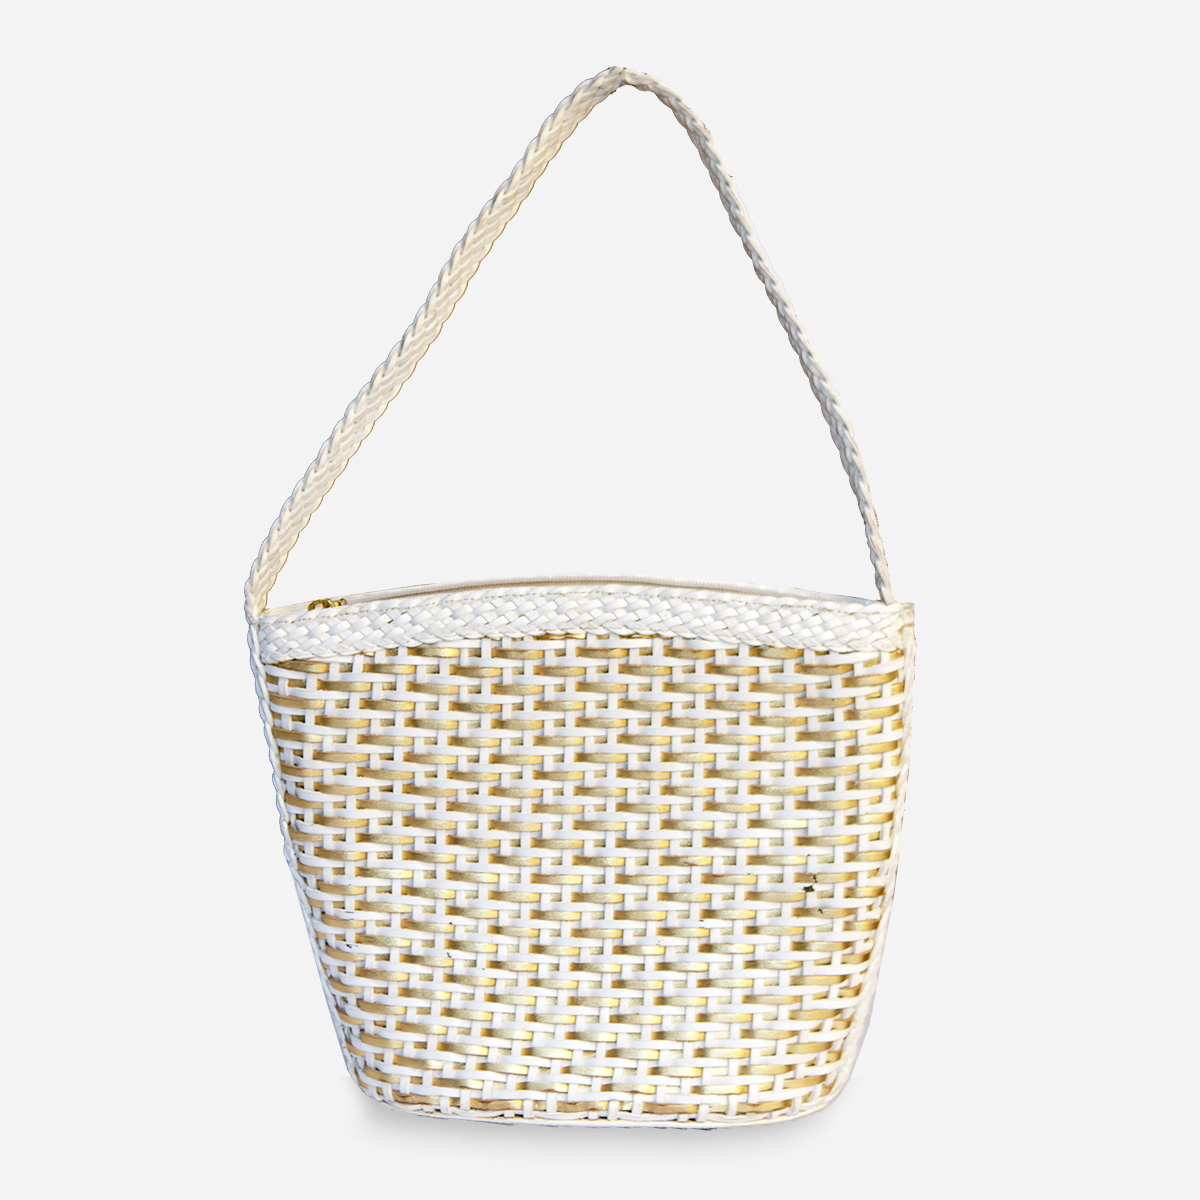 White and gold handbag